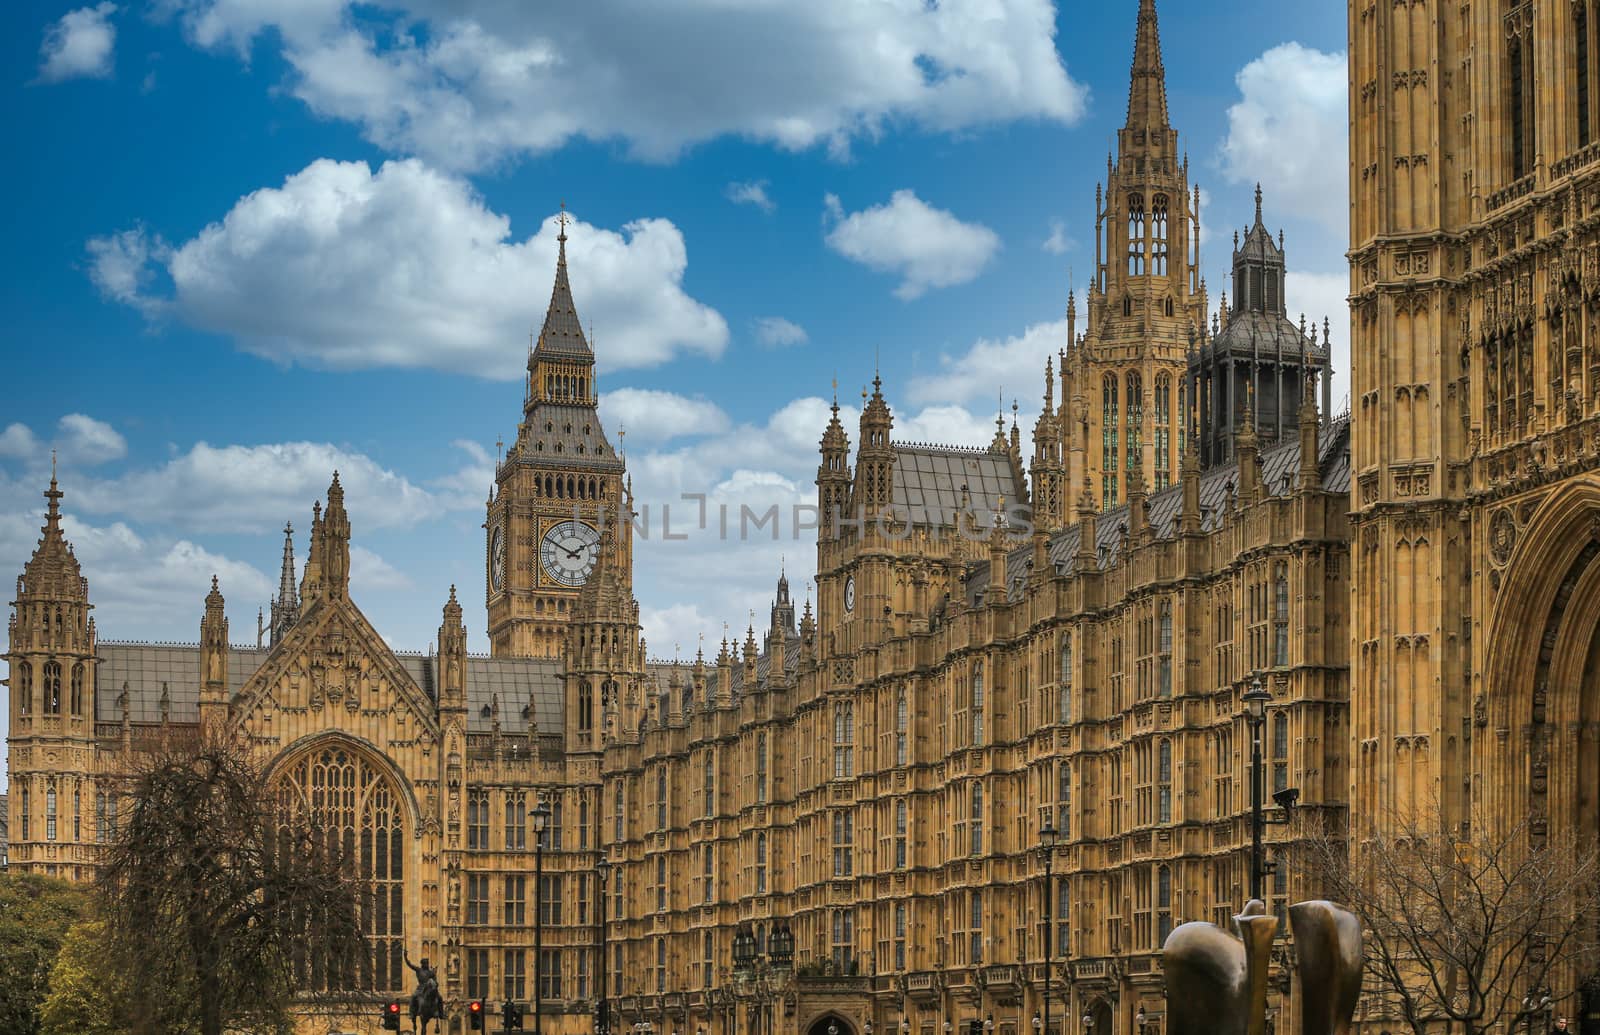 The famous british landmark Big Ben in the United Kingdom